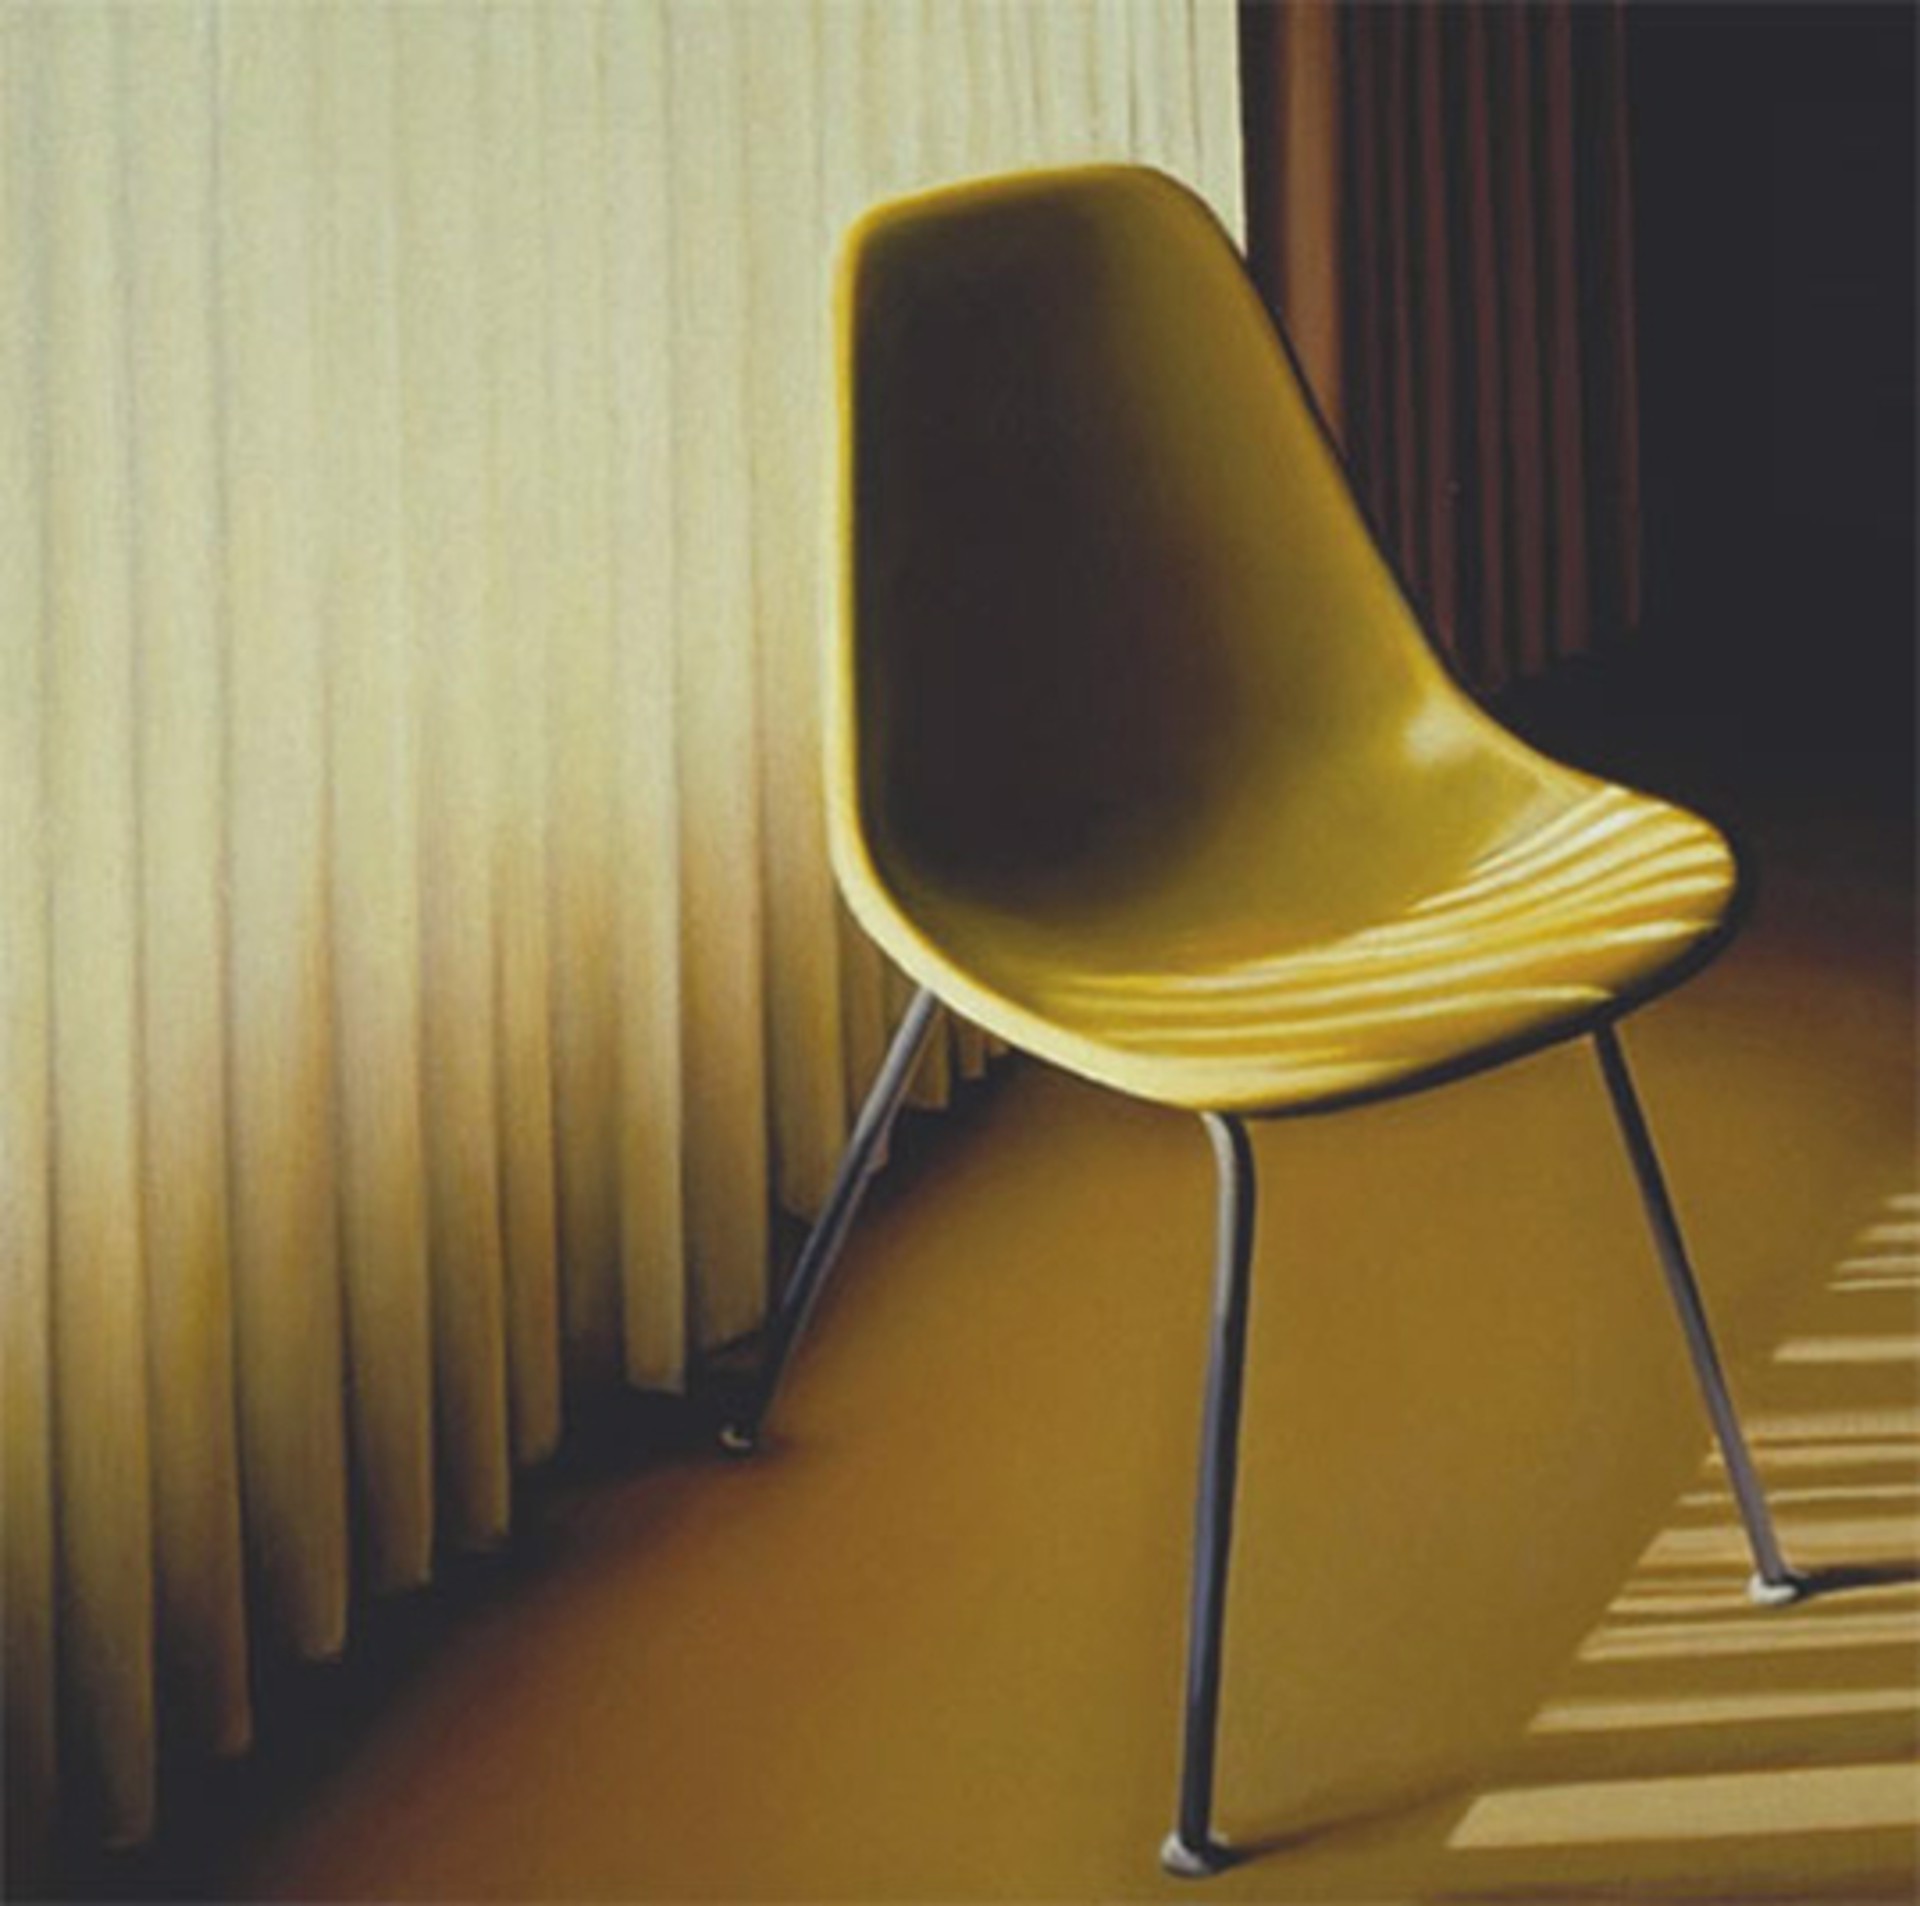 Palm Springs Chair #1 by Ada Sadler